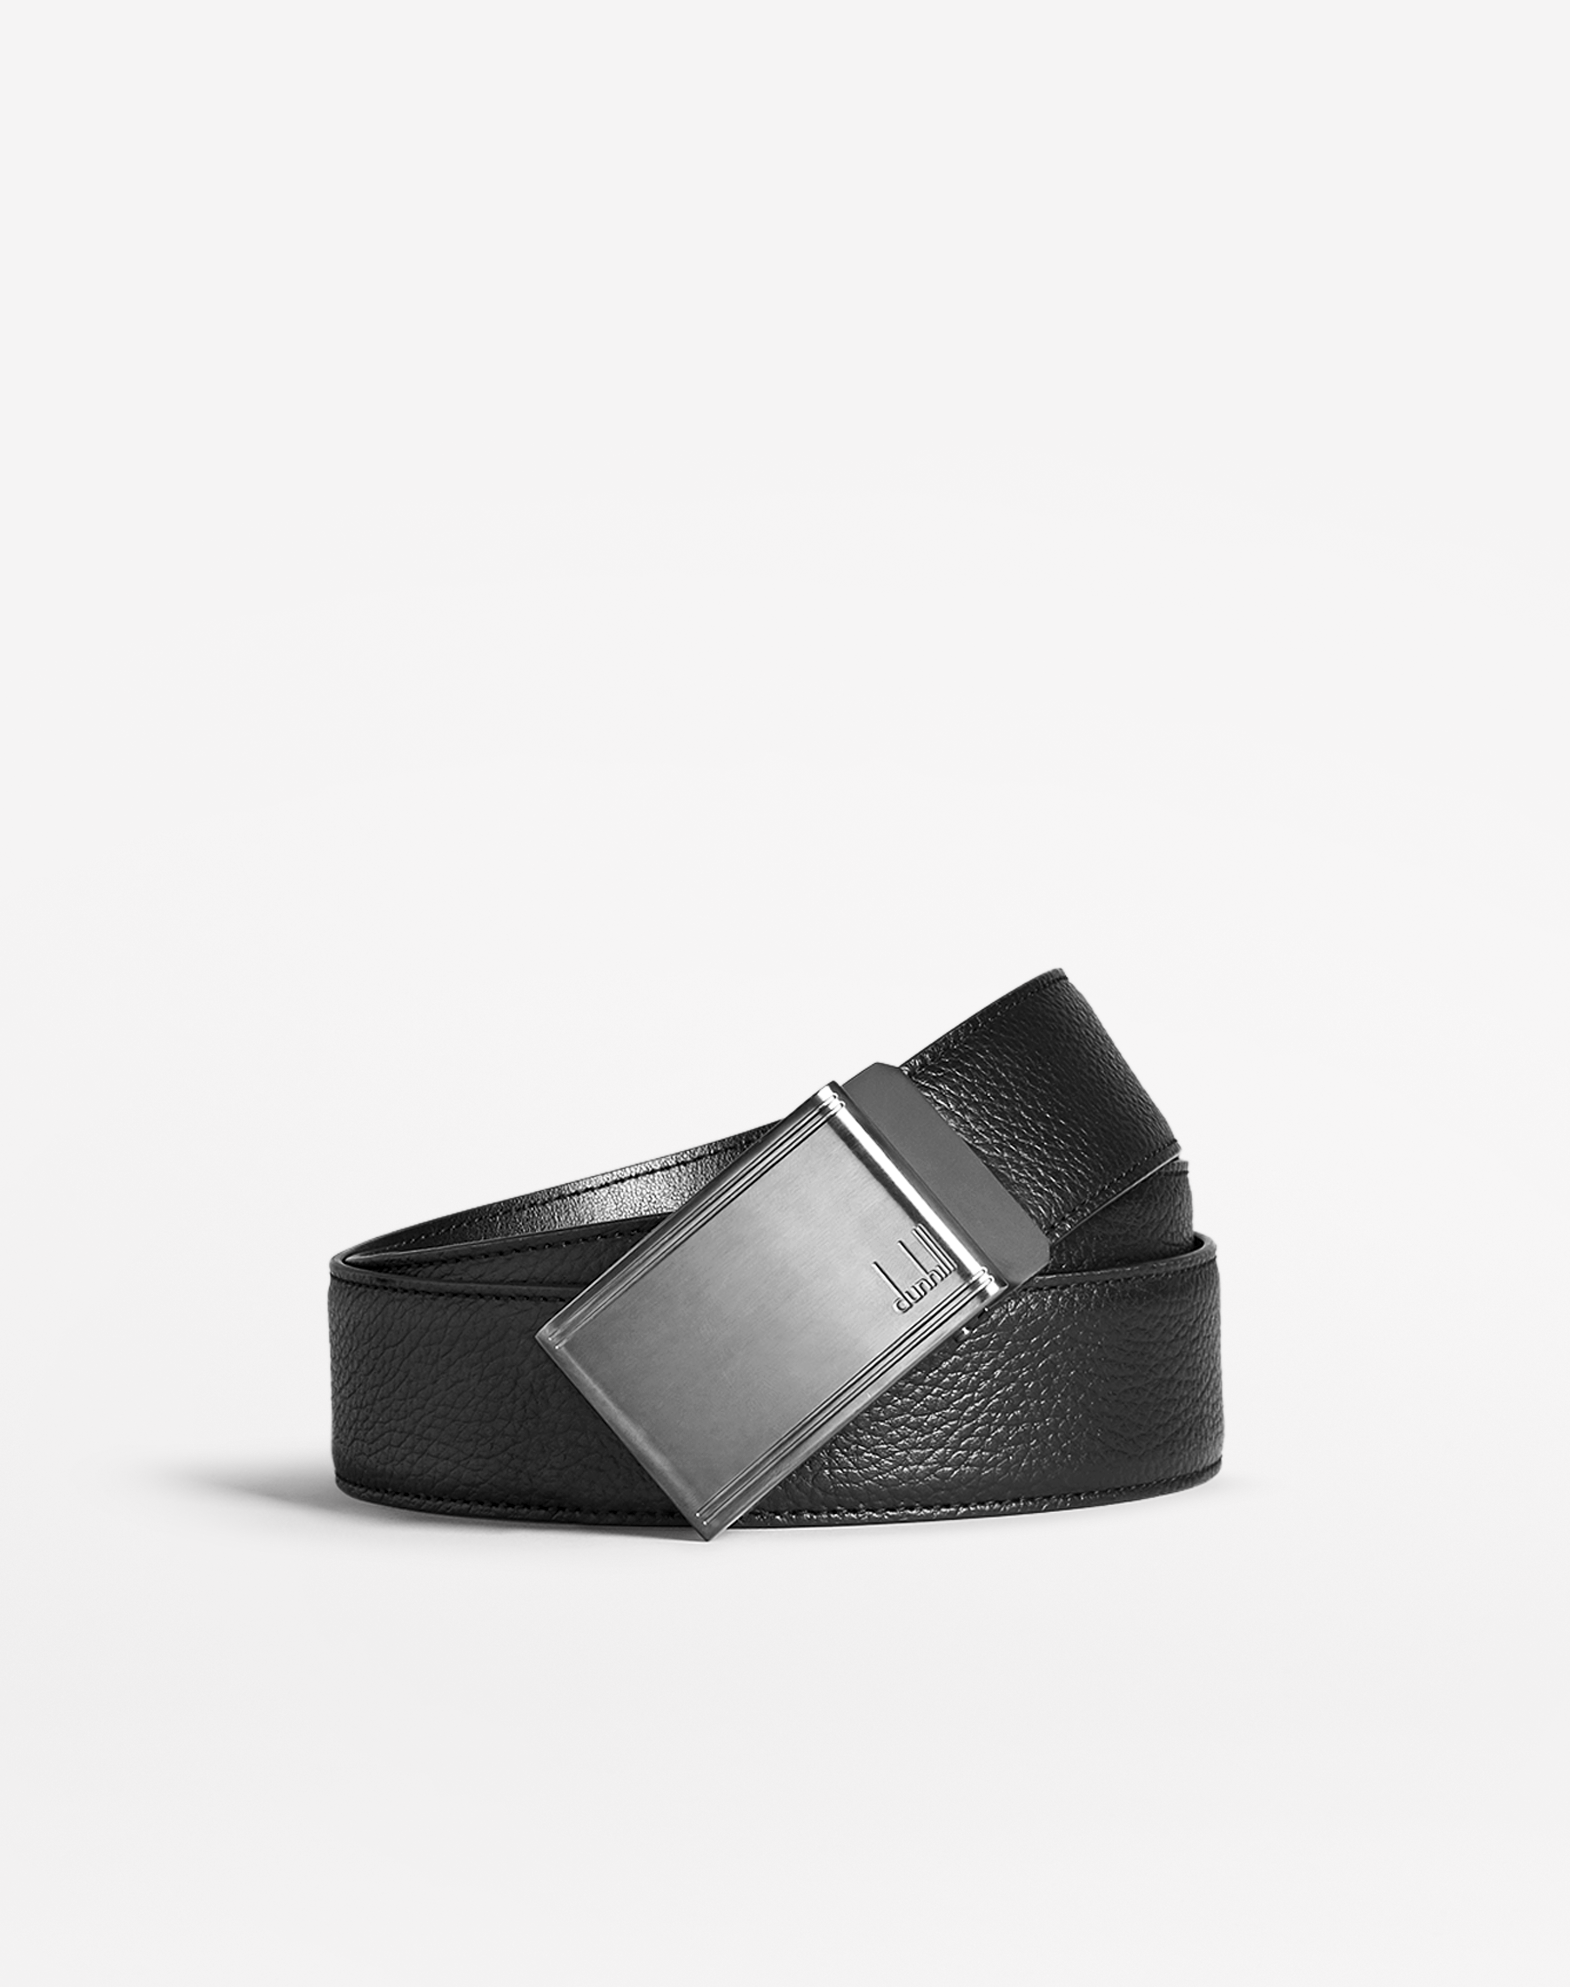 Dunhill Luxury Men's Belts